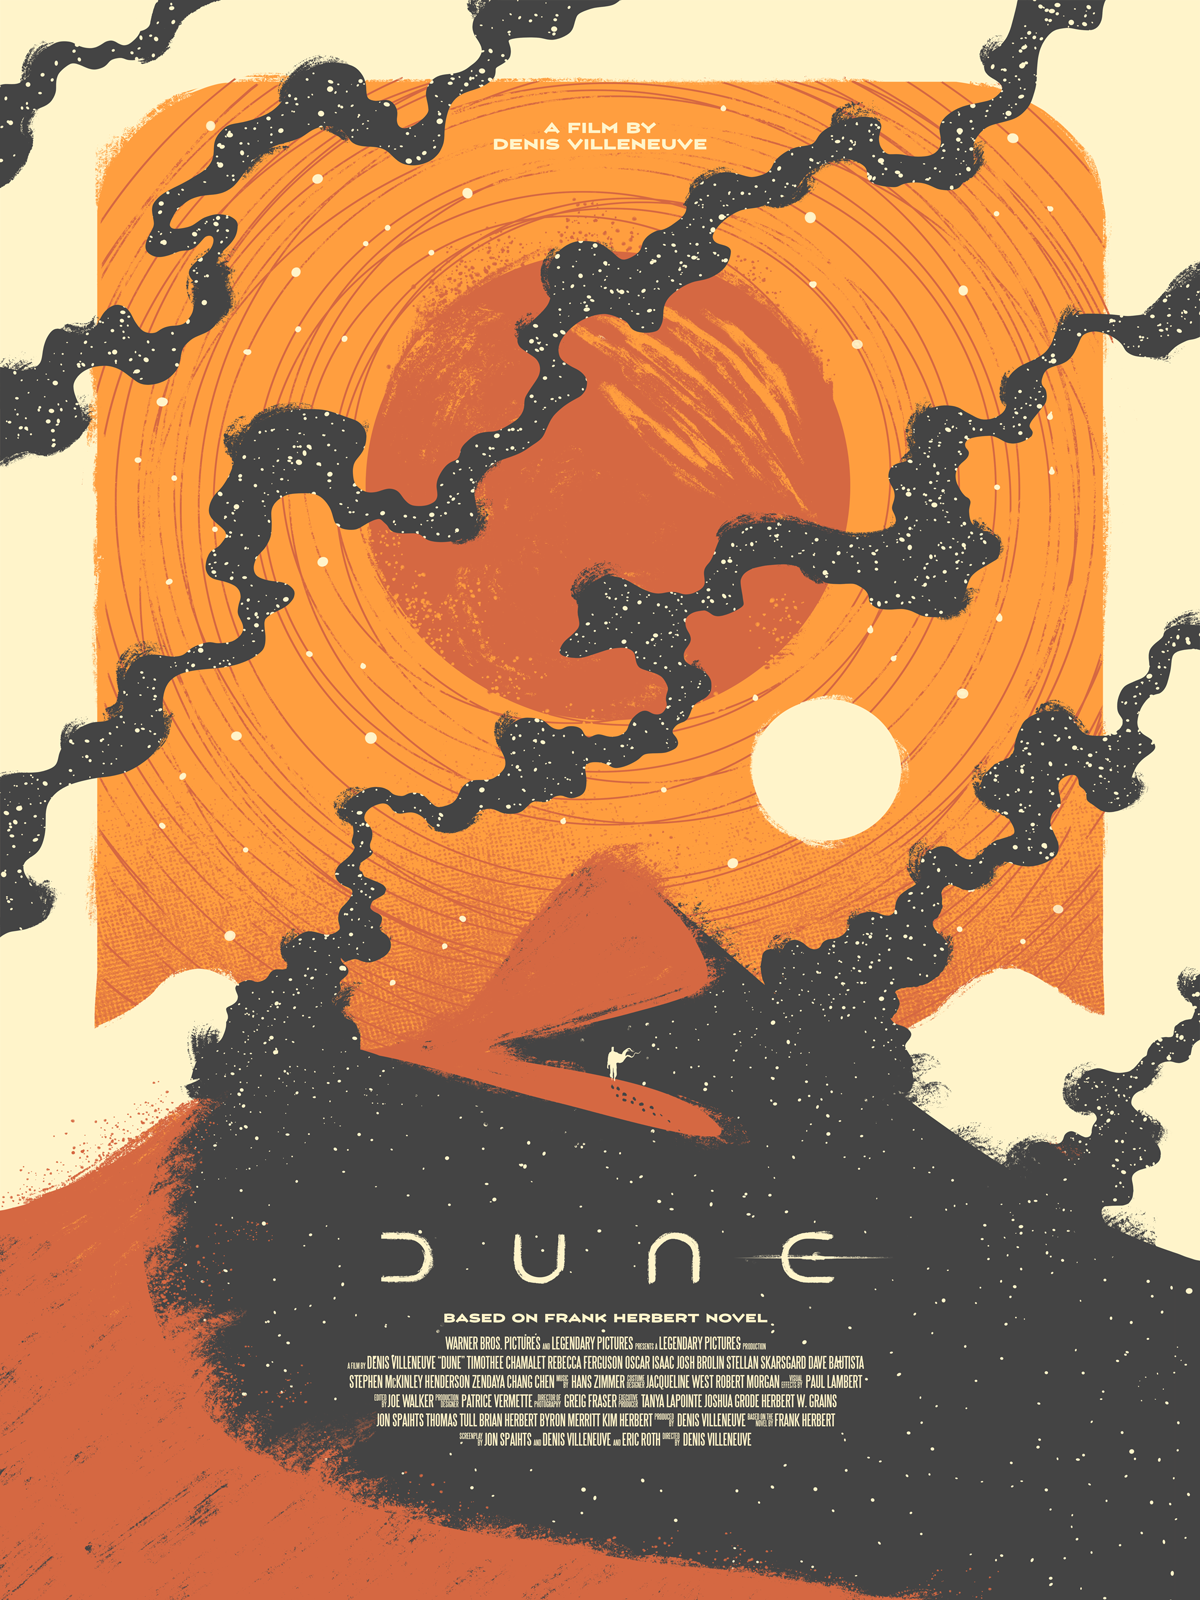 Digital Art  dune Film   graphic design  ILLUSTRATION  movie poster